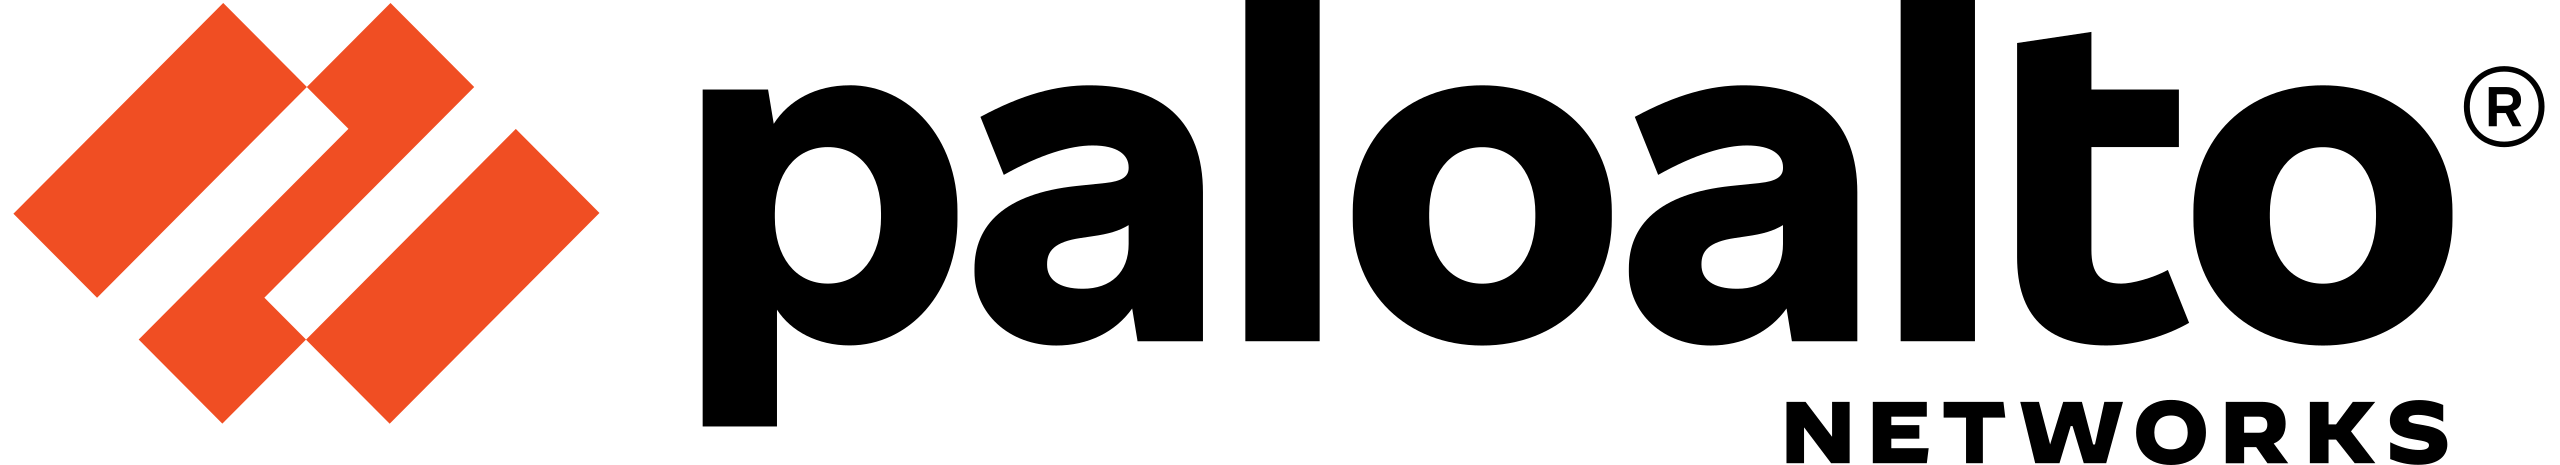 PaloAltoNetworks-Logo.png